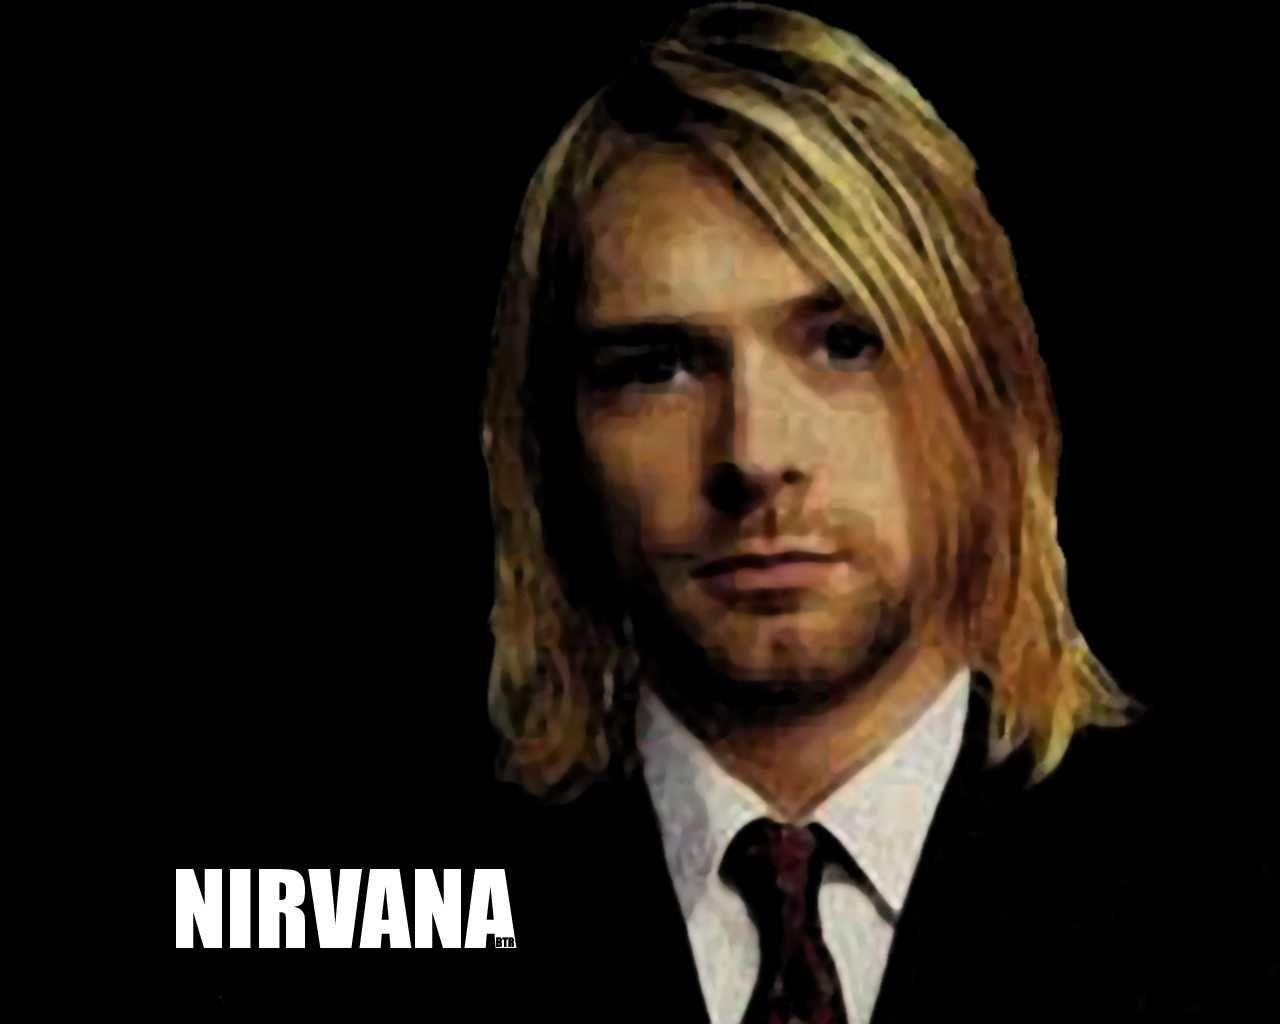 Wallpaper For > Kurt Cobain iPhone Wallpaper